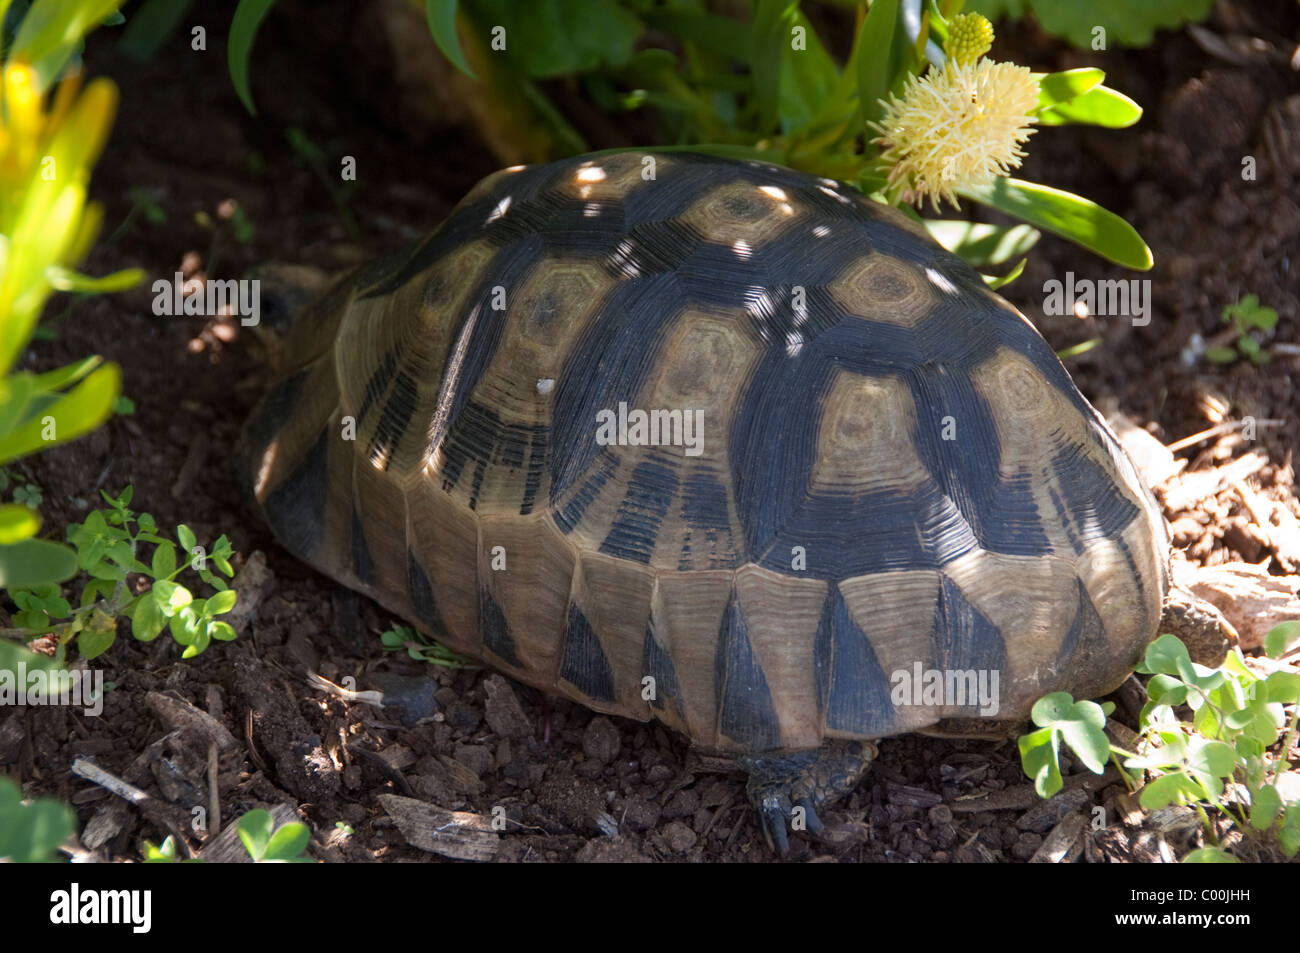 South Africa, Cape Town, Kirstenbosch National Botanical Garden. Garden land turtle, wild. Stock Photo